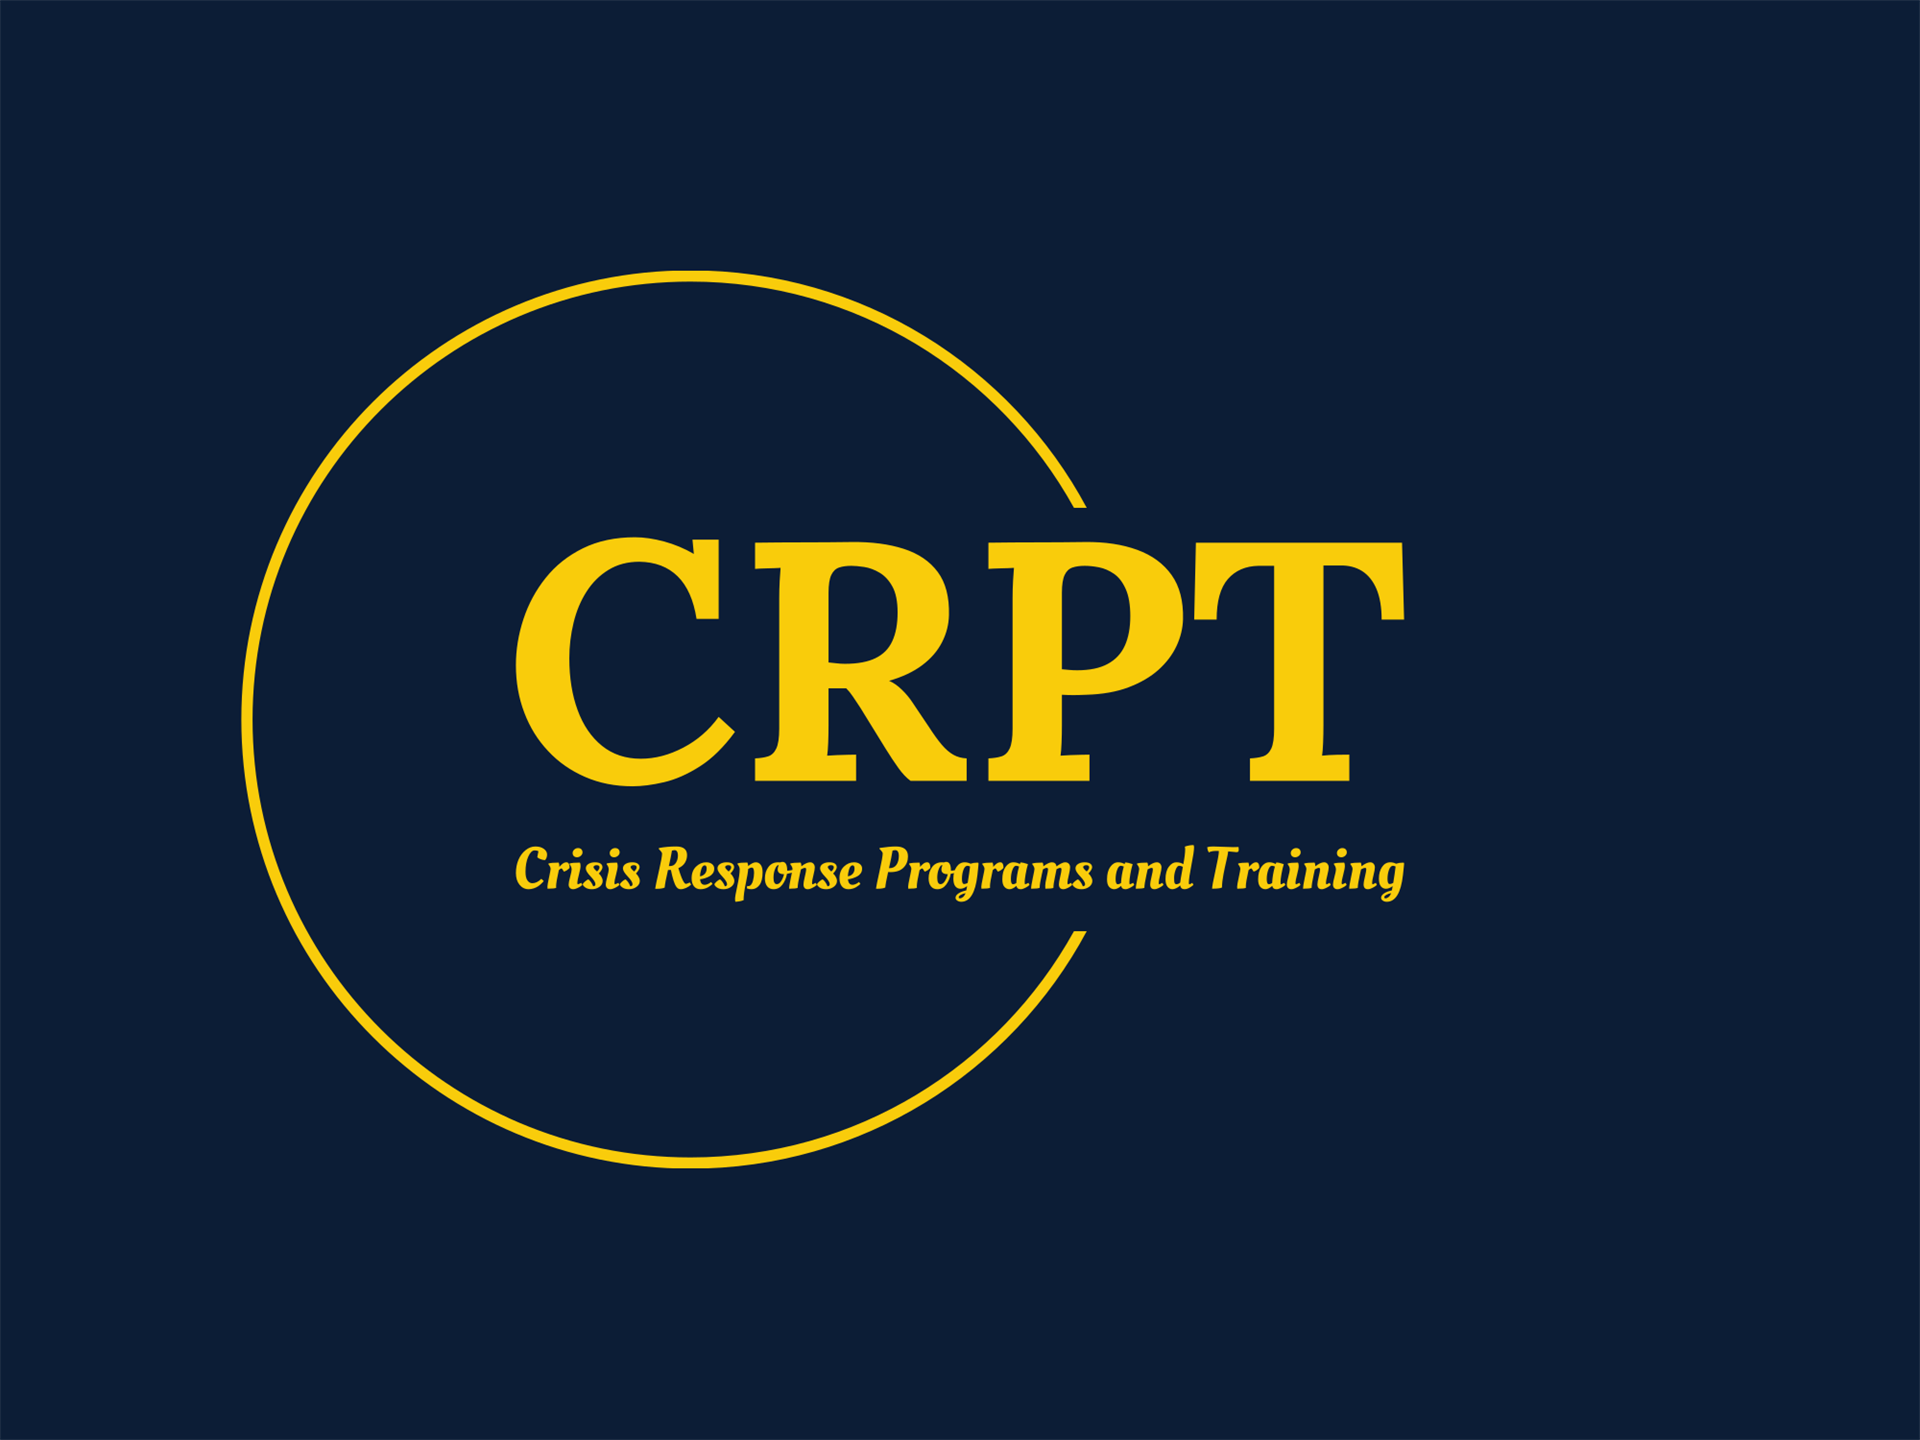 Crisis Response Programs and Training